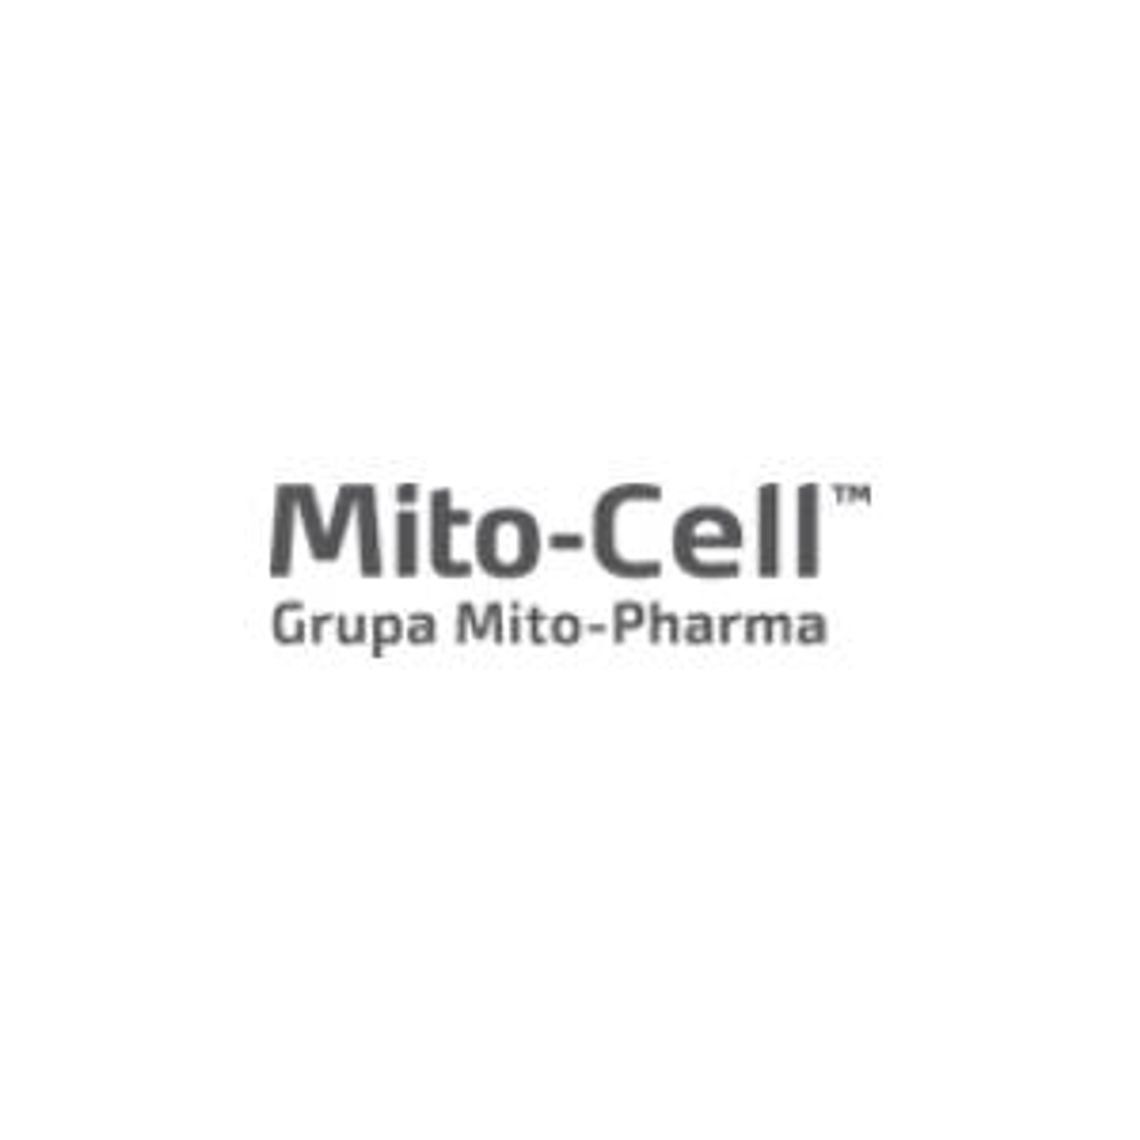 Substancje mitochondrialne - Mito-cell